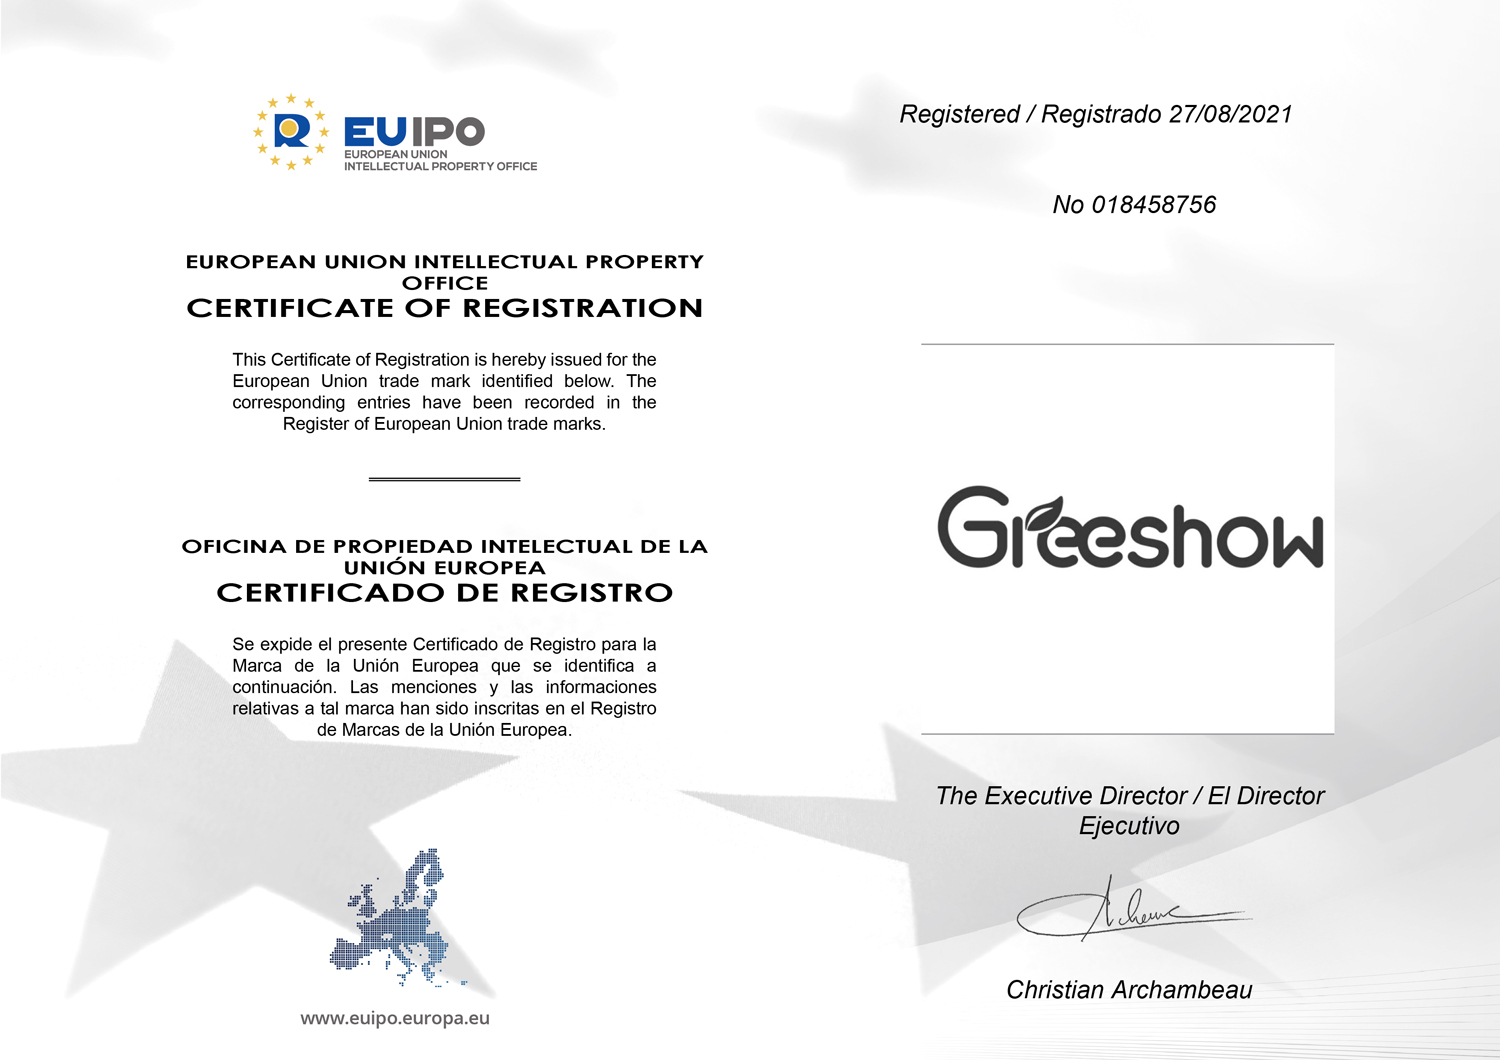 greeshow brand certificate